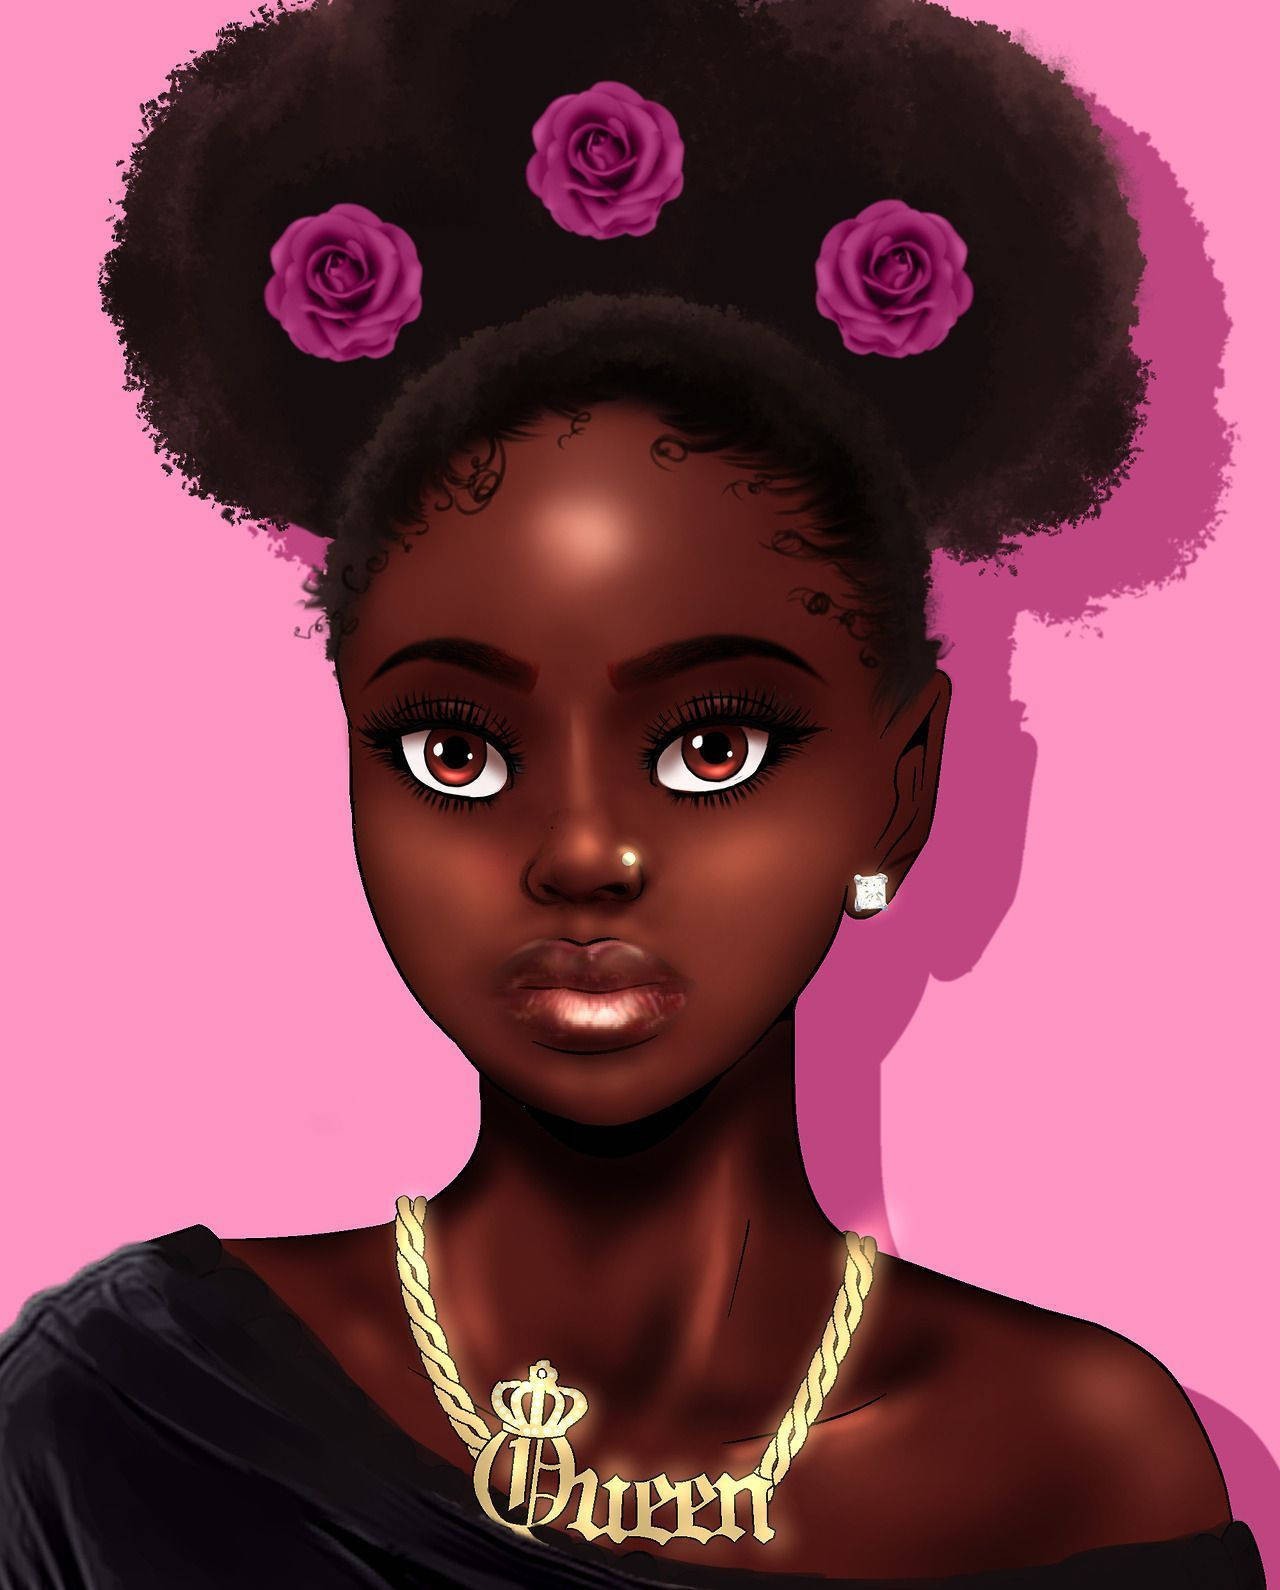 Queen Beautiful Black Woman Art Wallpaper